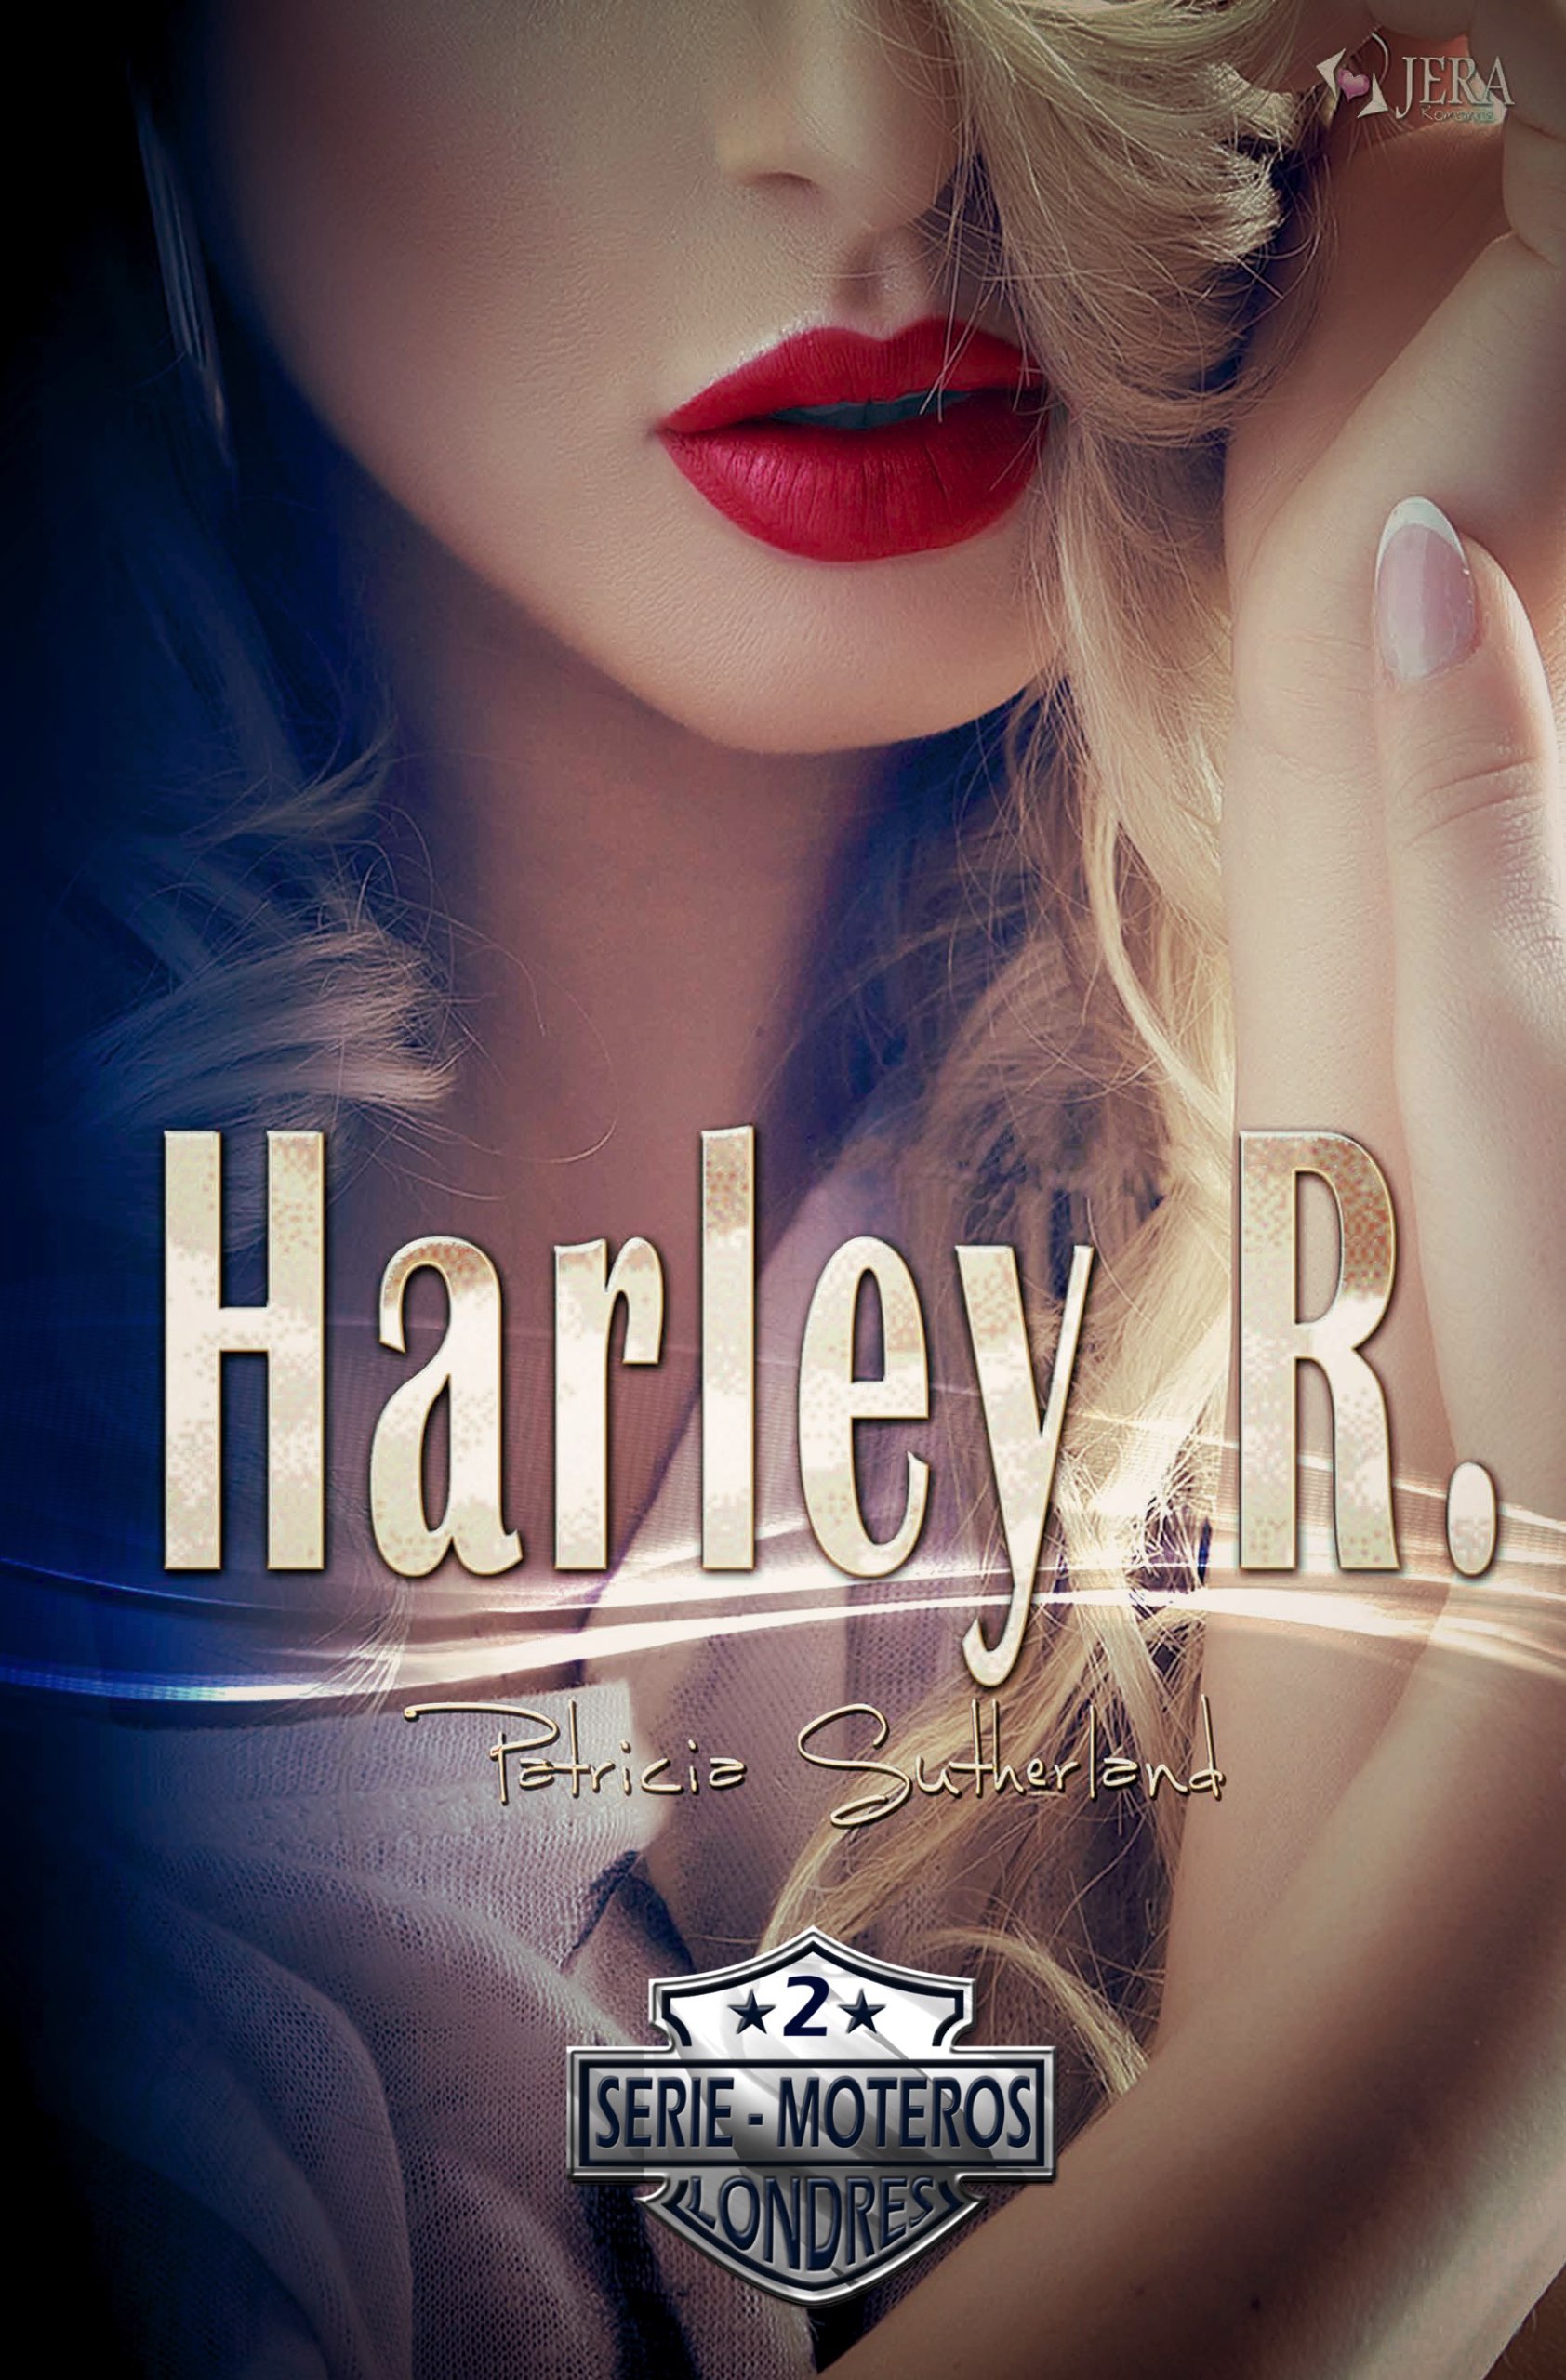 Harley R. Serie Moteros # 2